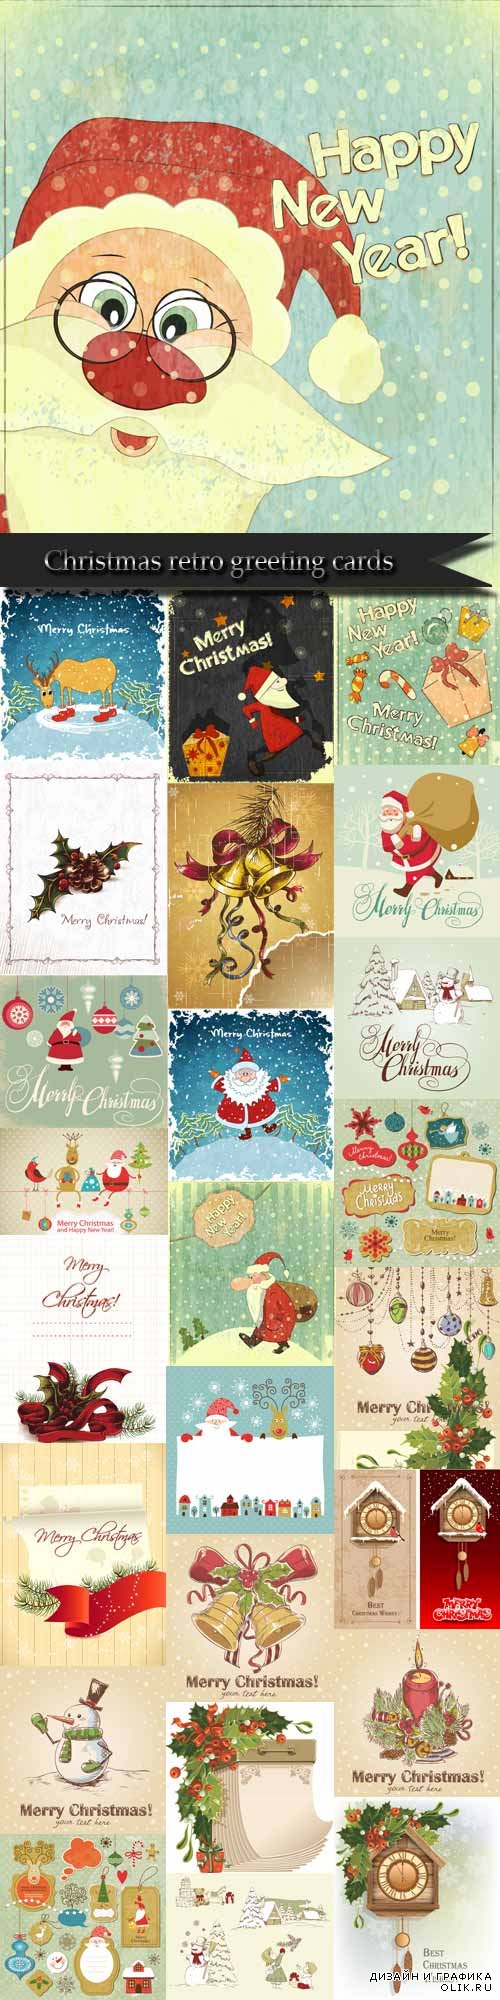 Christmas retro greeting cards